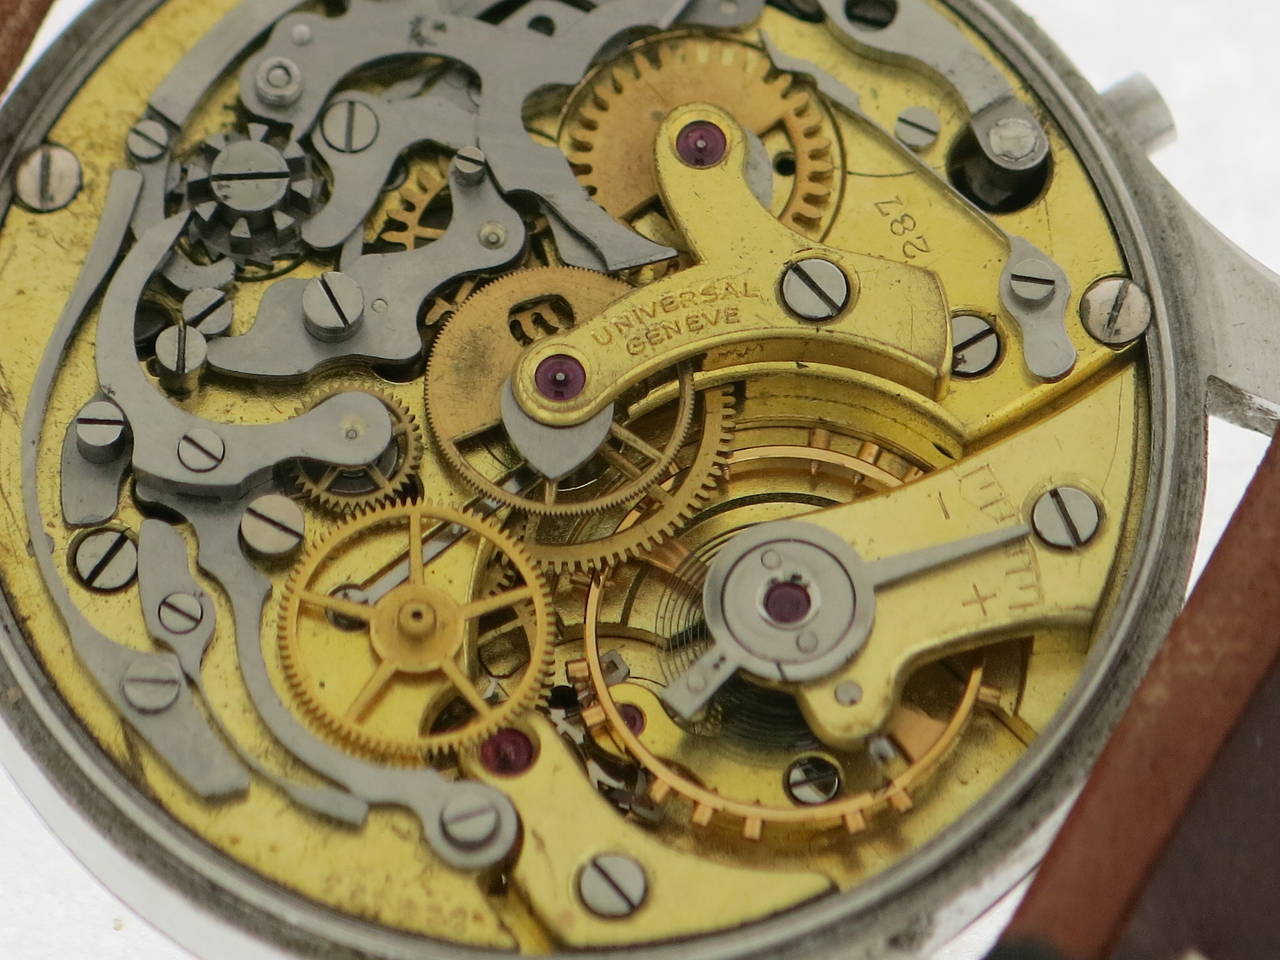 Universal Geneve Stainless Steel Chronograph Wristwatch 2